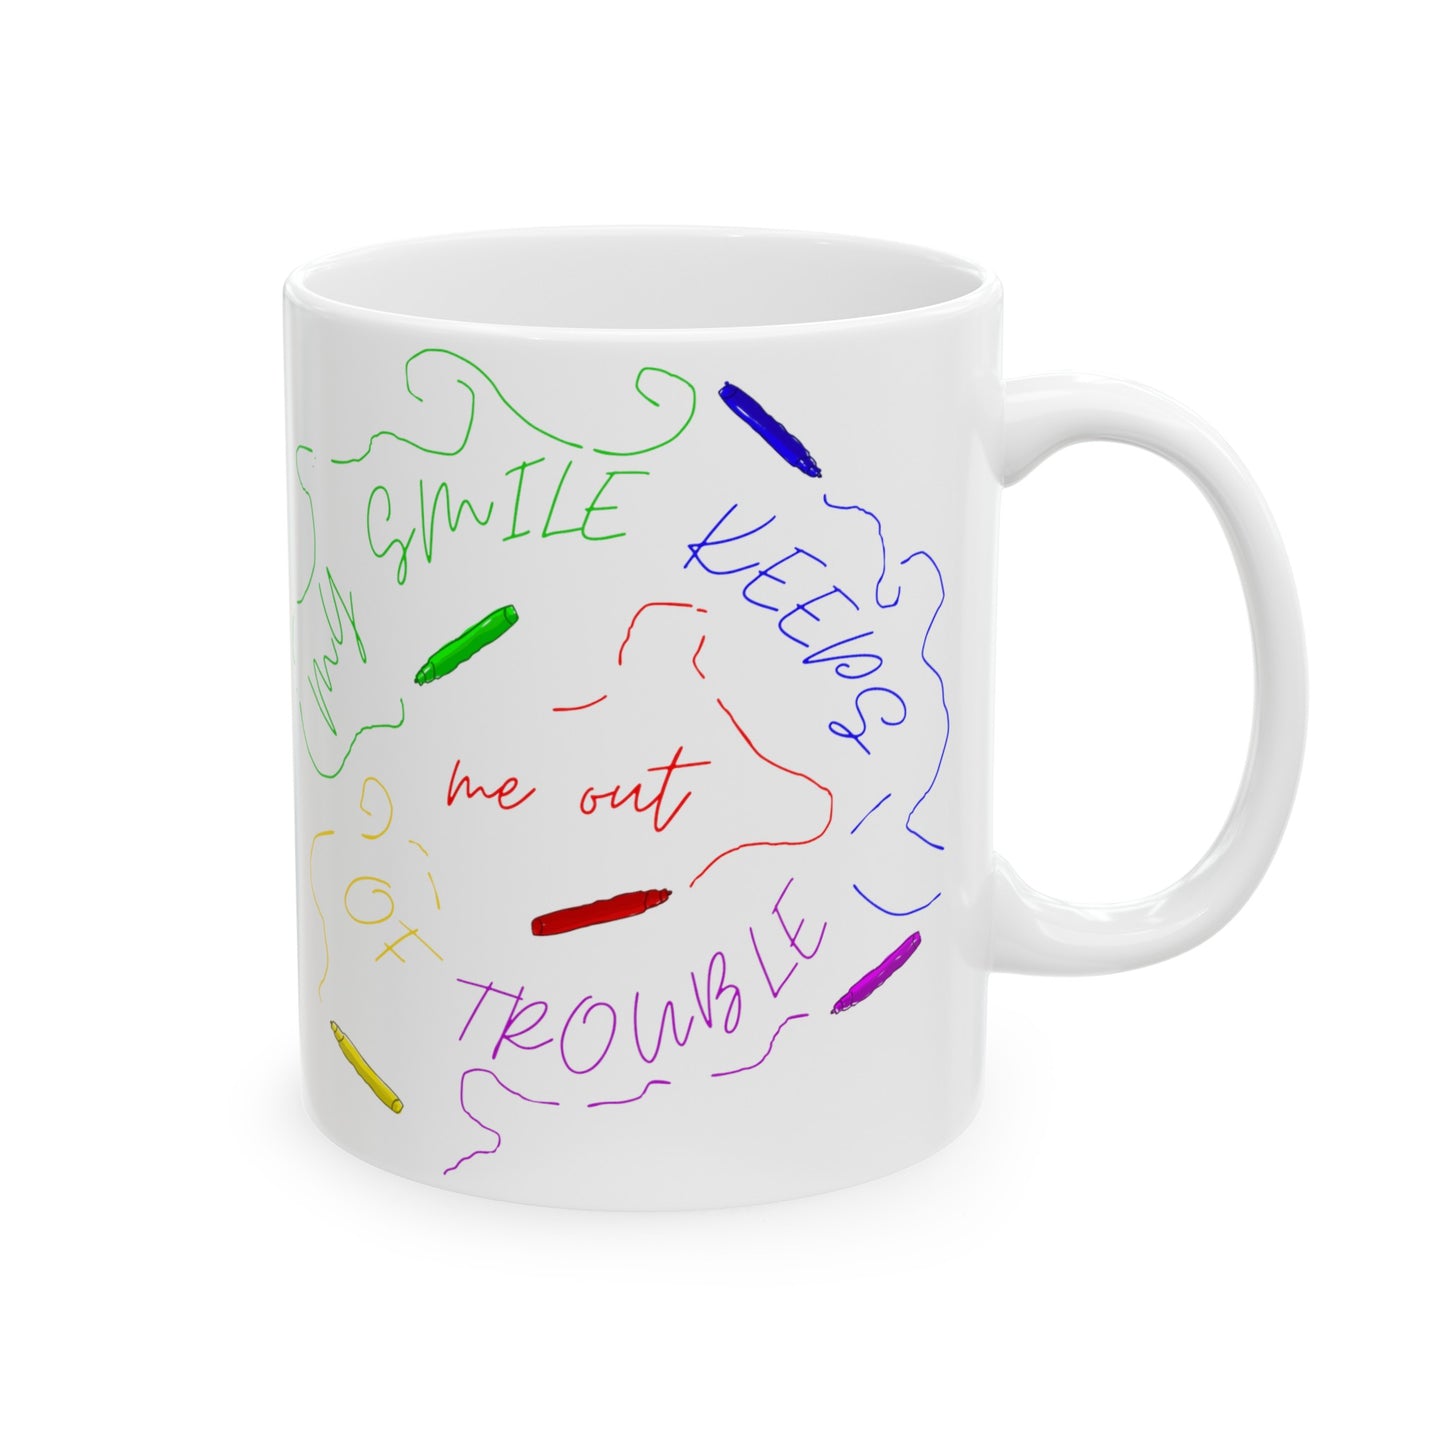 My Smile Keeps Me Out Of Trouble - Ceramic Mug 11oz